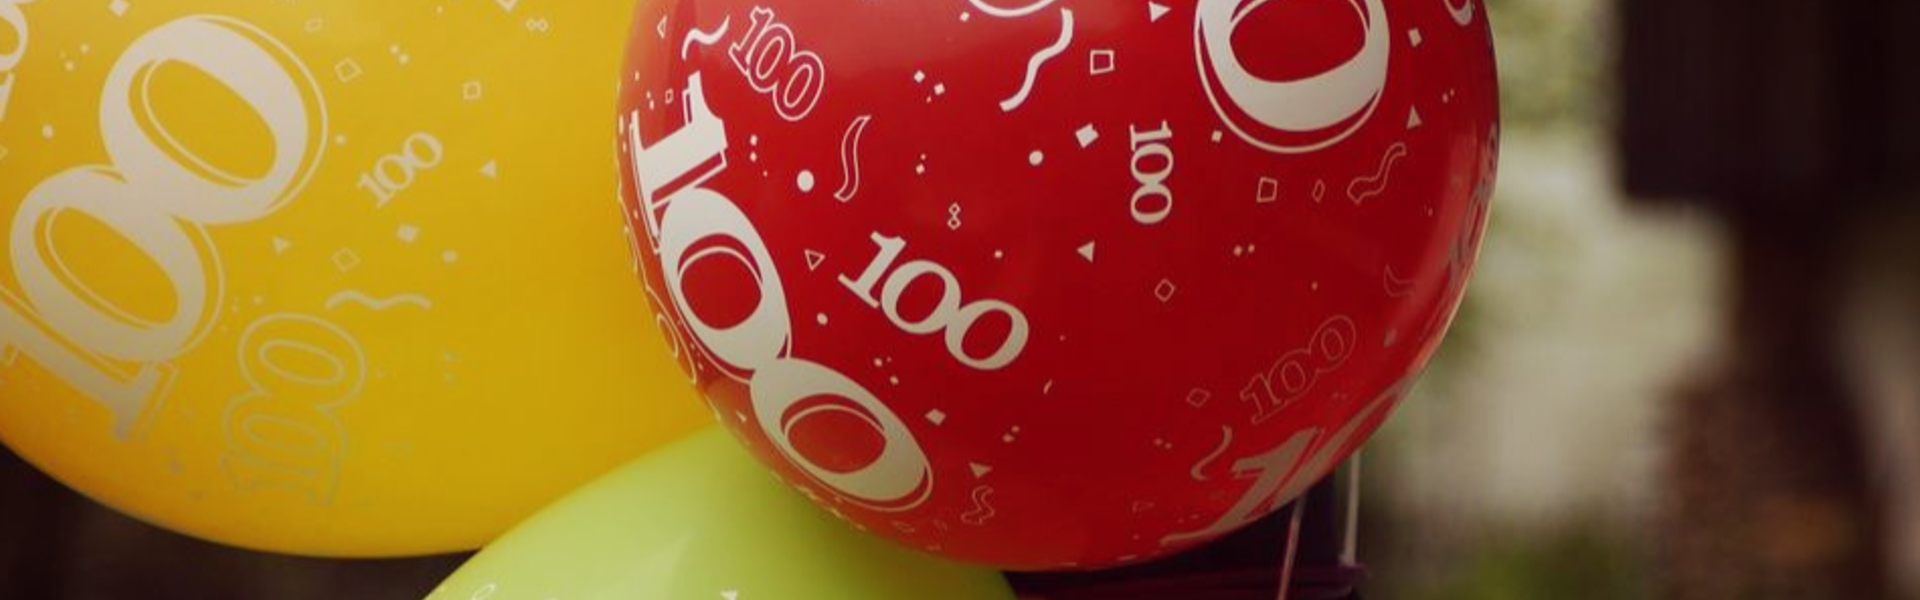 100 celebration balloons